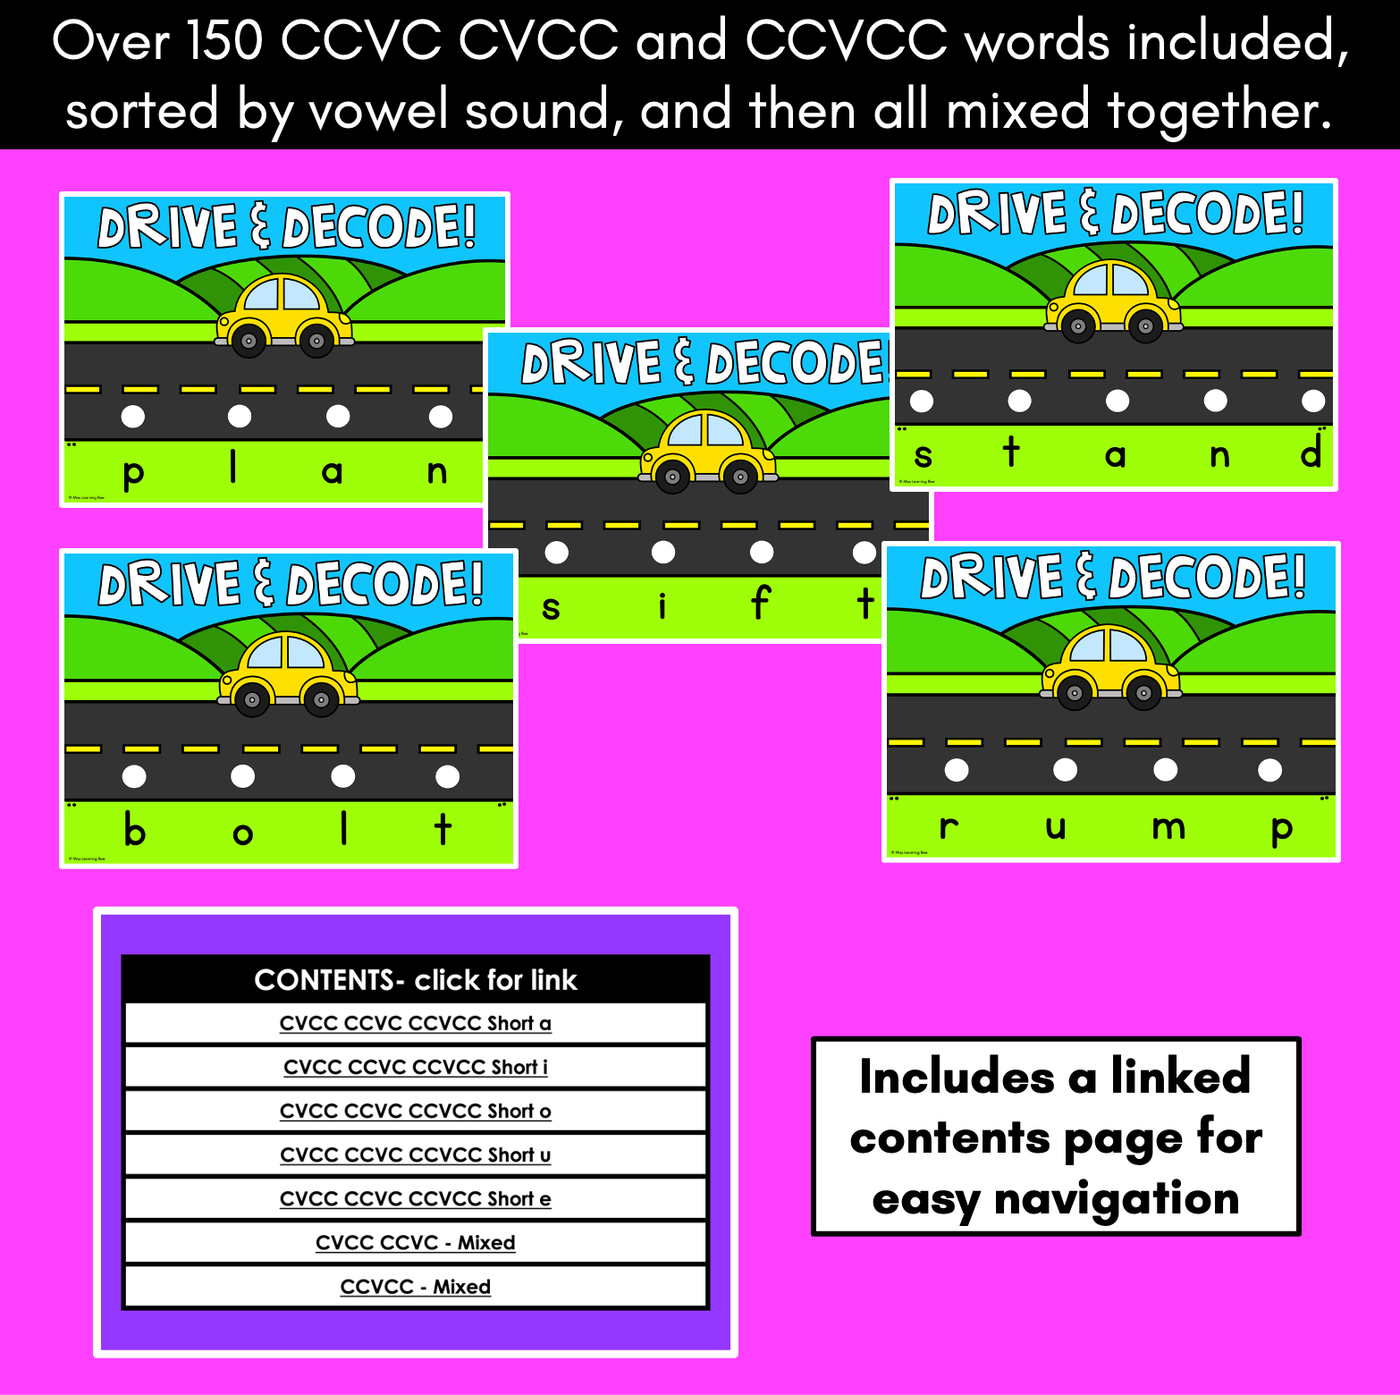 Blending CVCC CCVC CCVCC Words with Cars - DIGITAL SLIDES - Drive & Decode